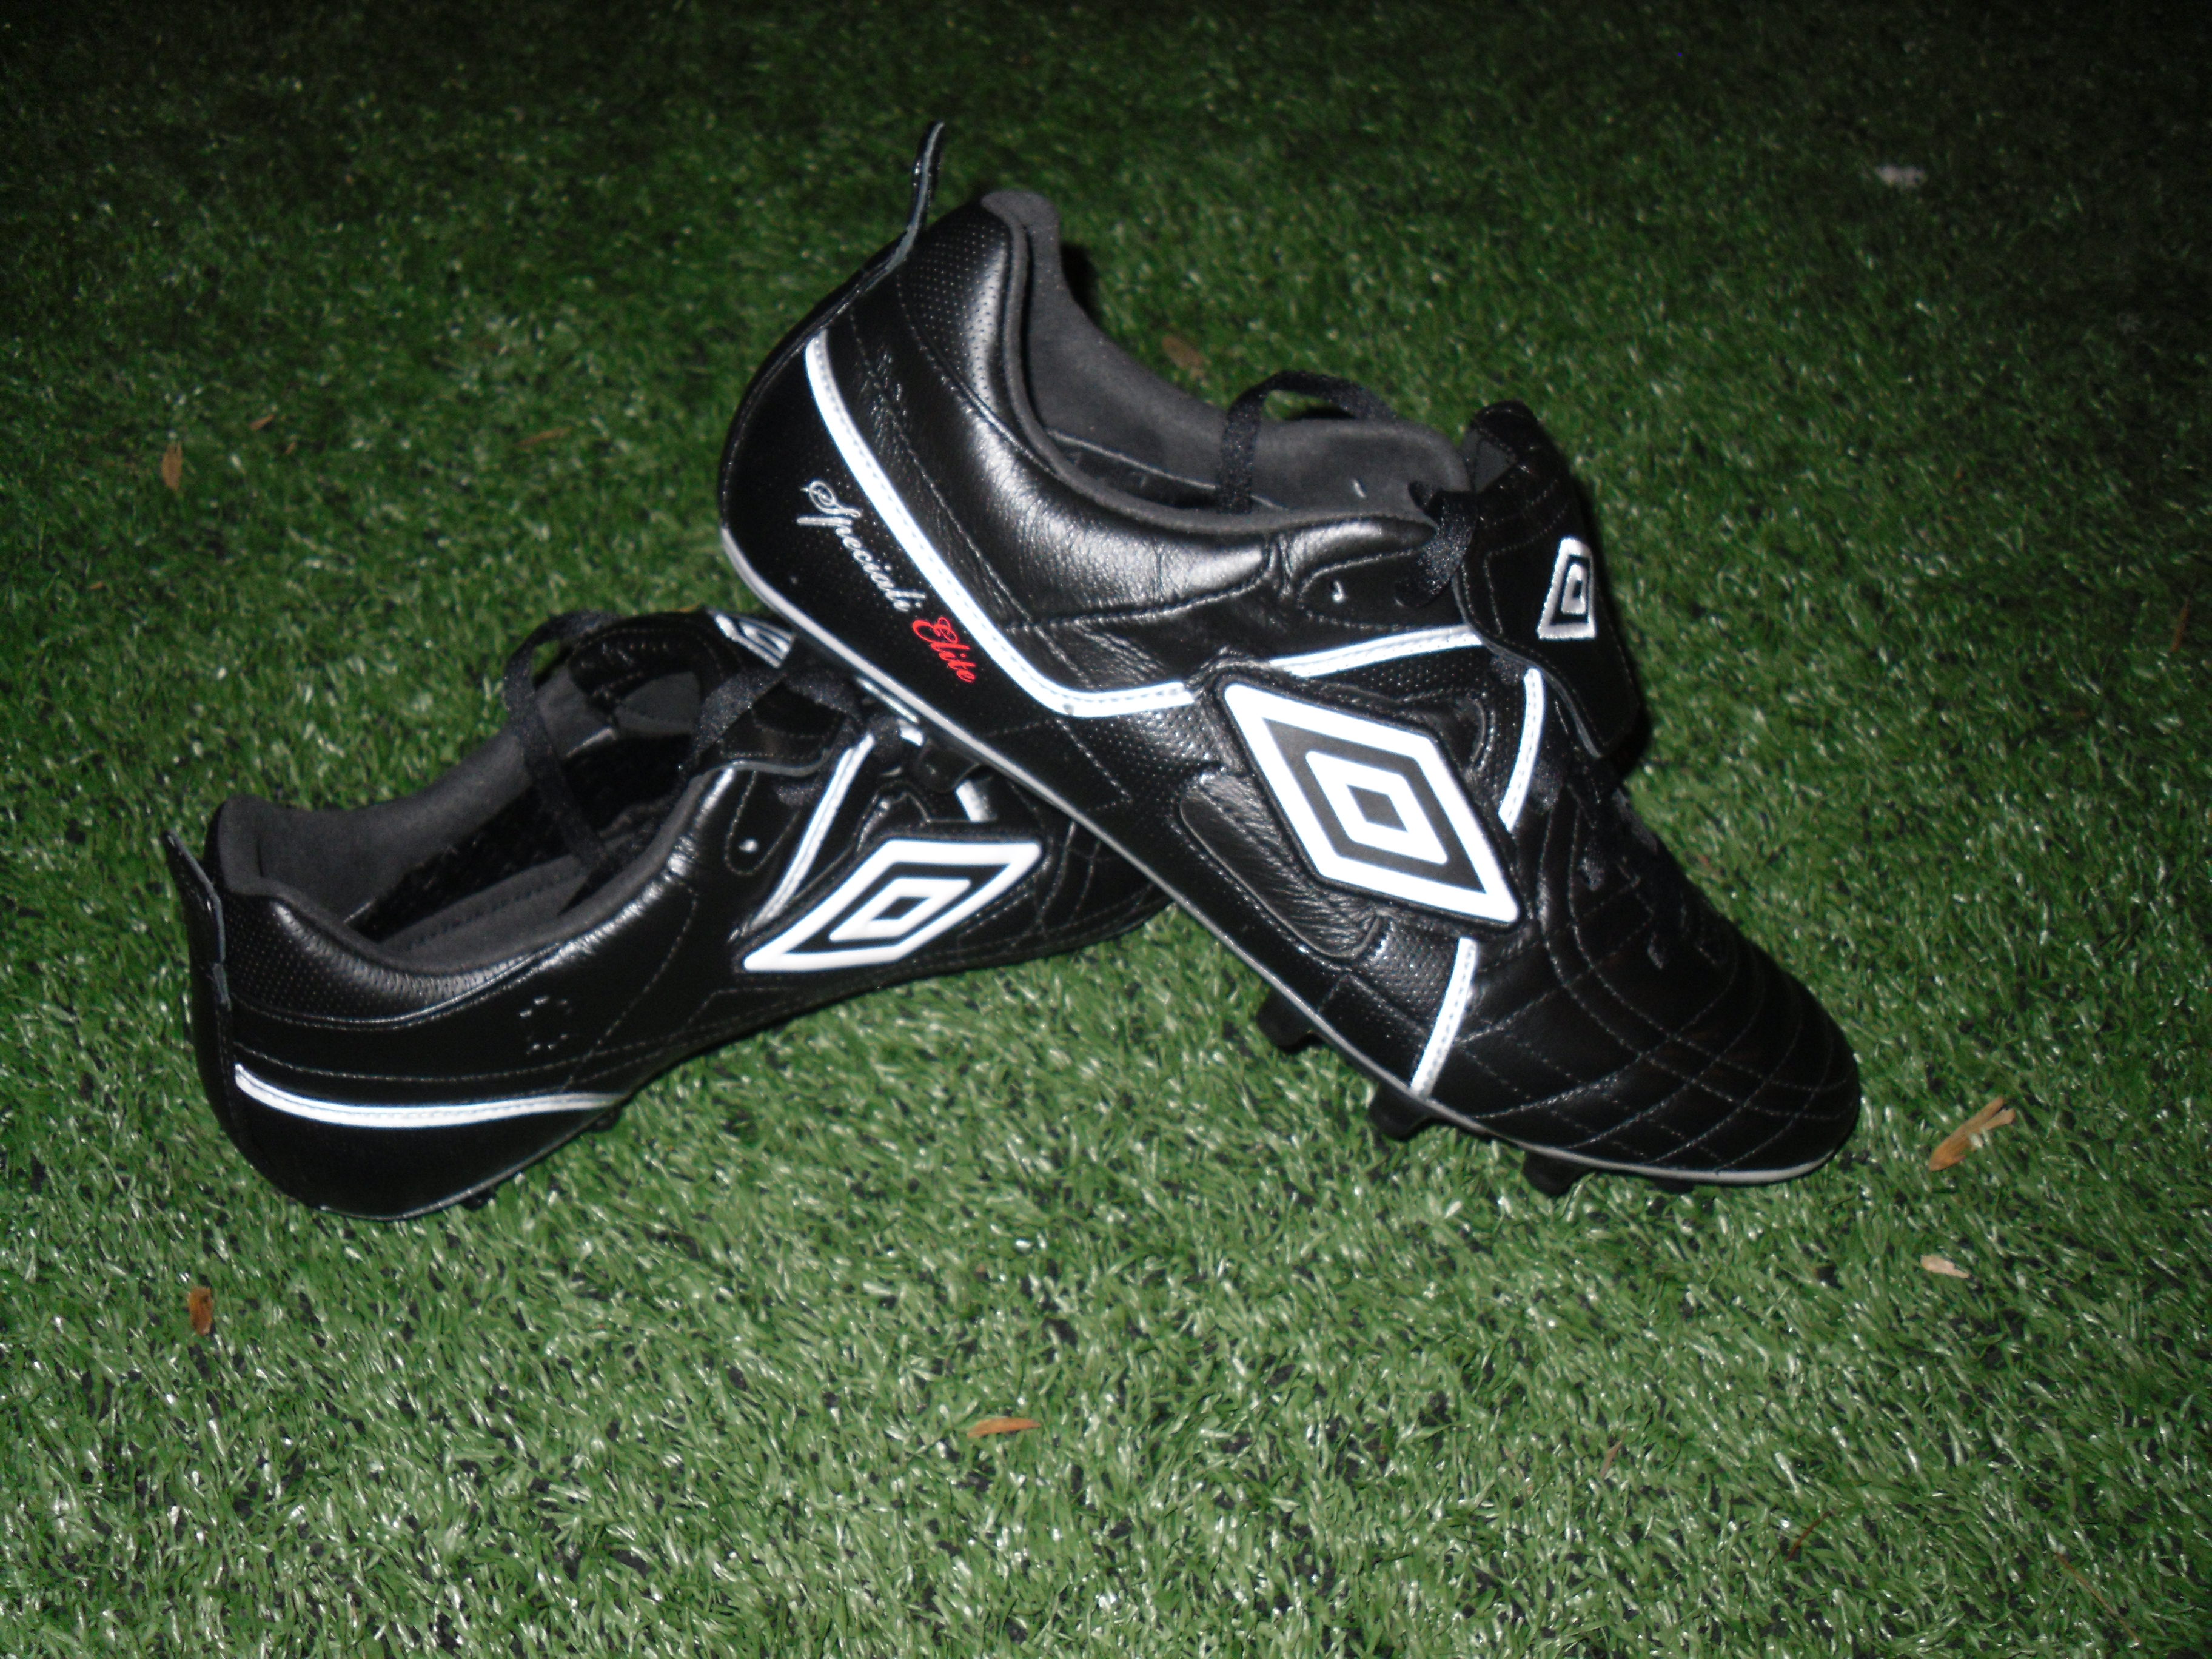 umbro leather football boots